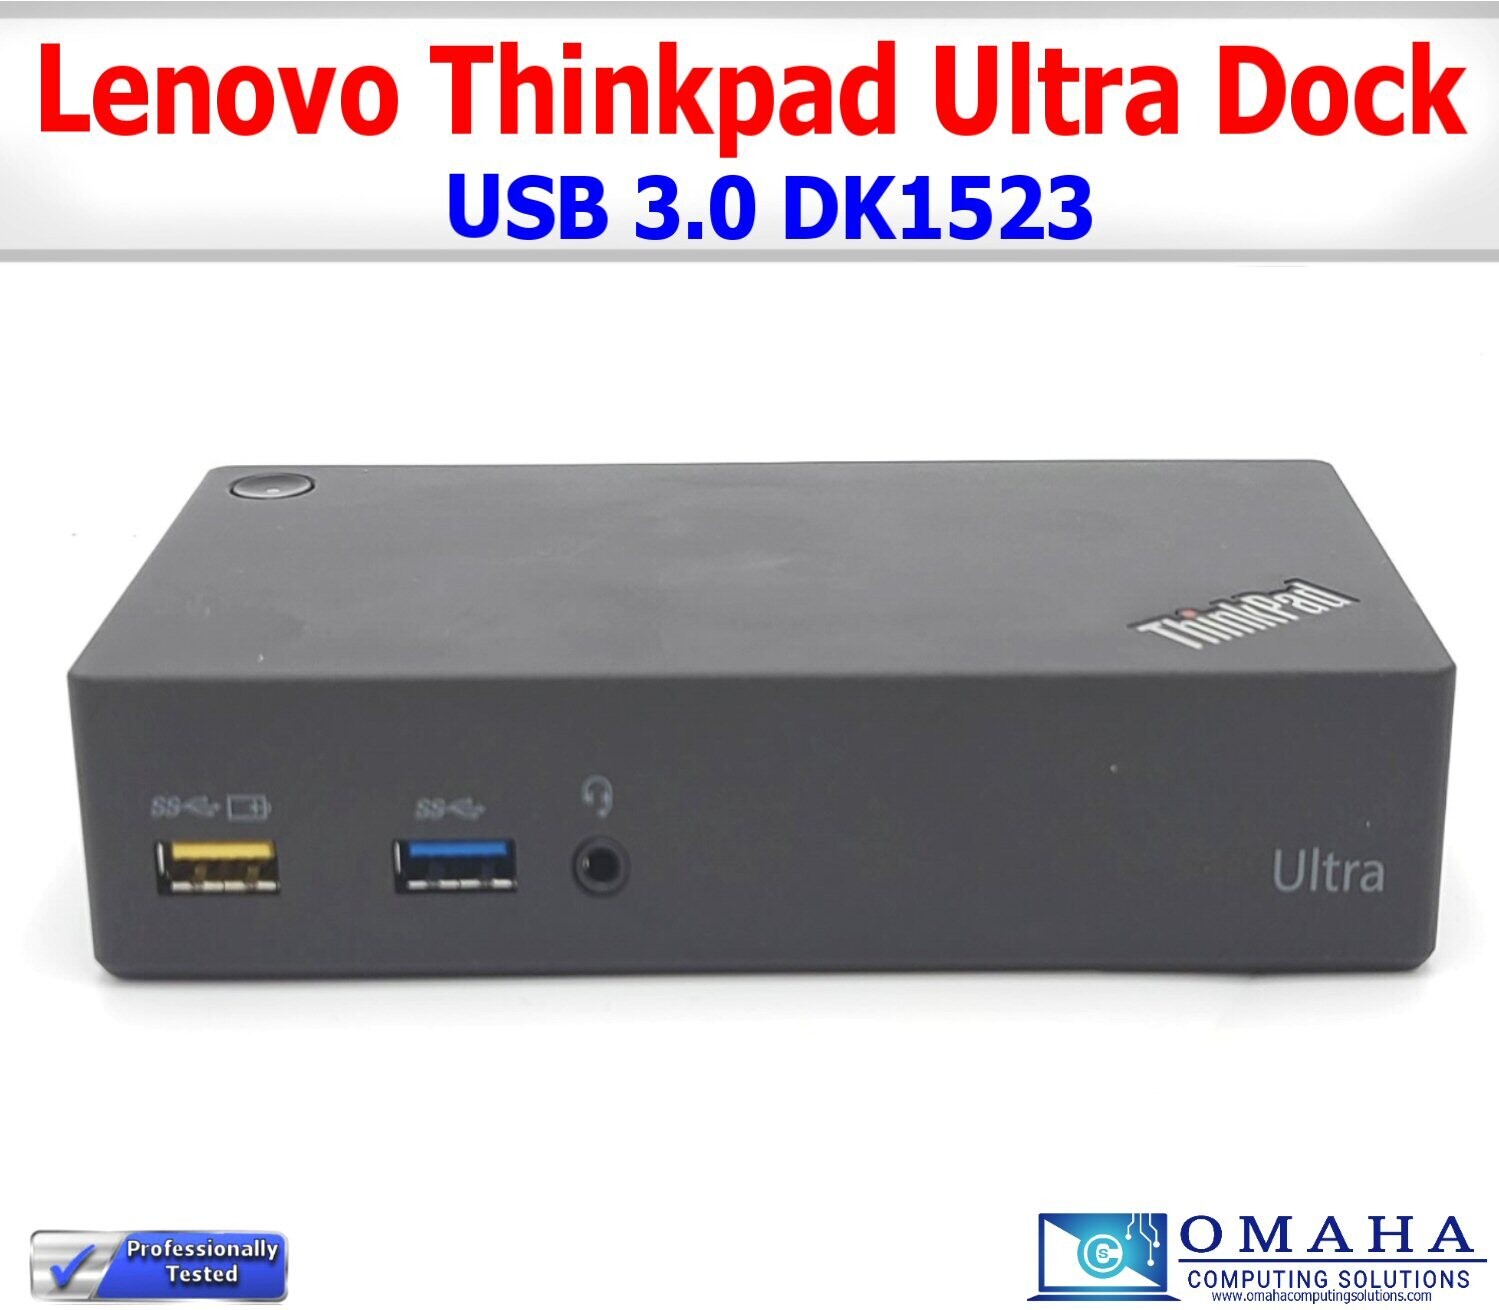 LENOVO THINKPAD USB 3.0 ULTRA DOCK DK1523 03X7131 40A8 DOCKING STATION  W/EXTRAS | Store | Omaha Computing Solutions